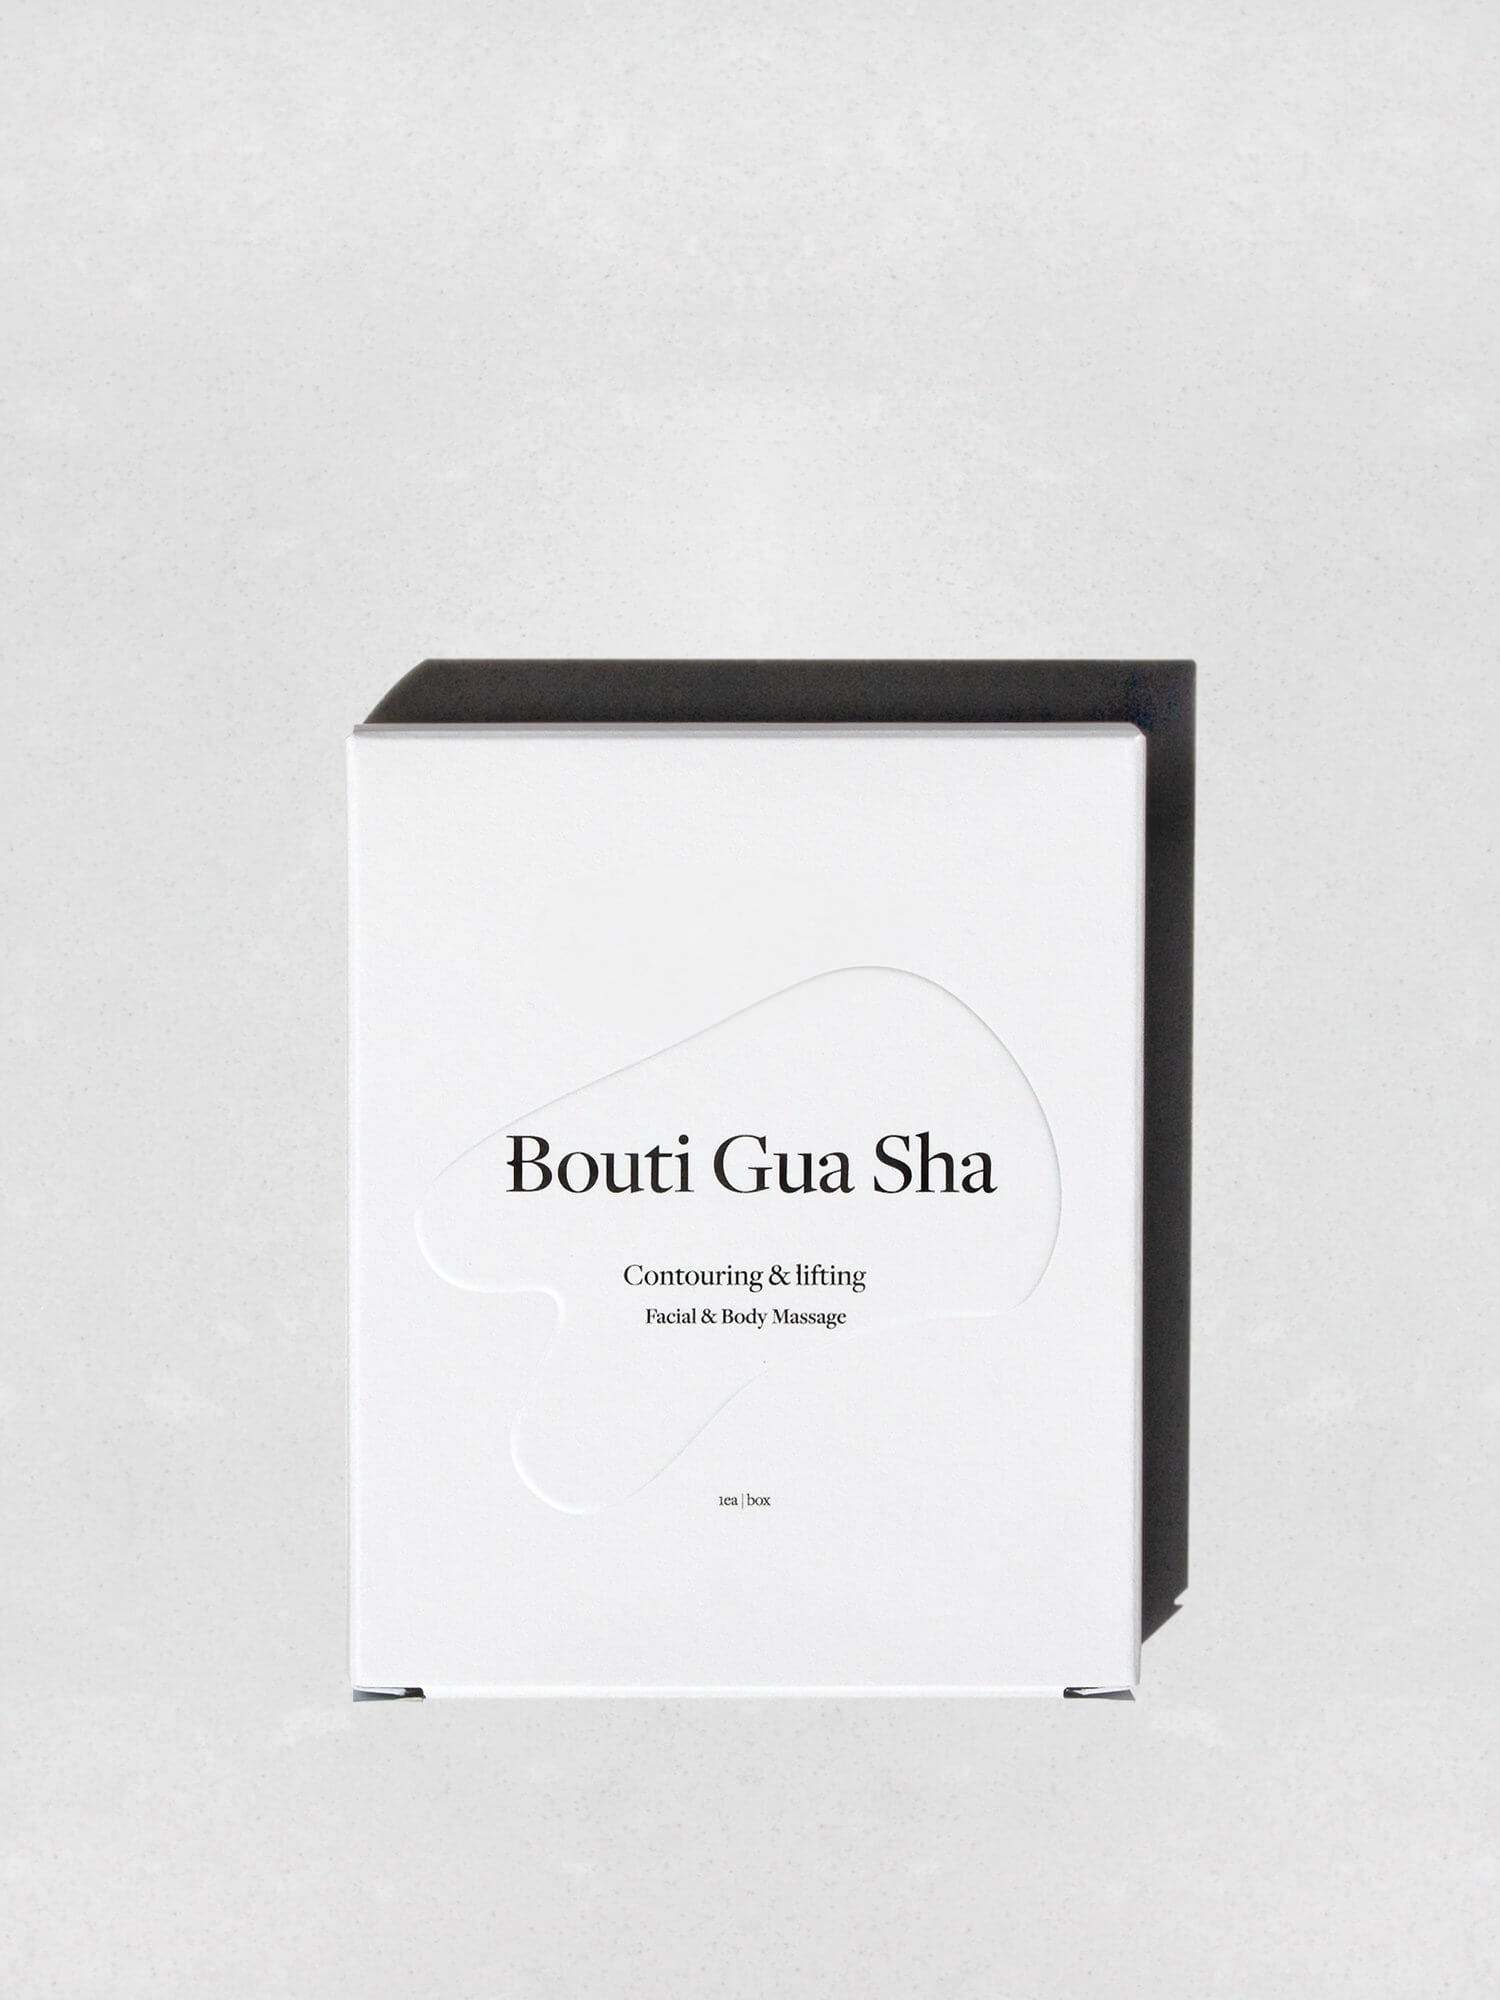 Bouti Gua Sha